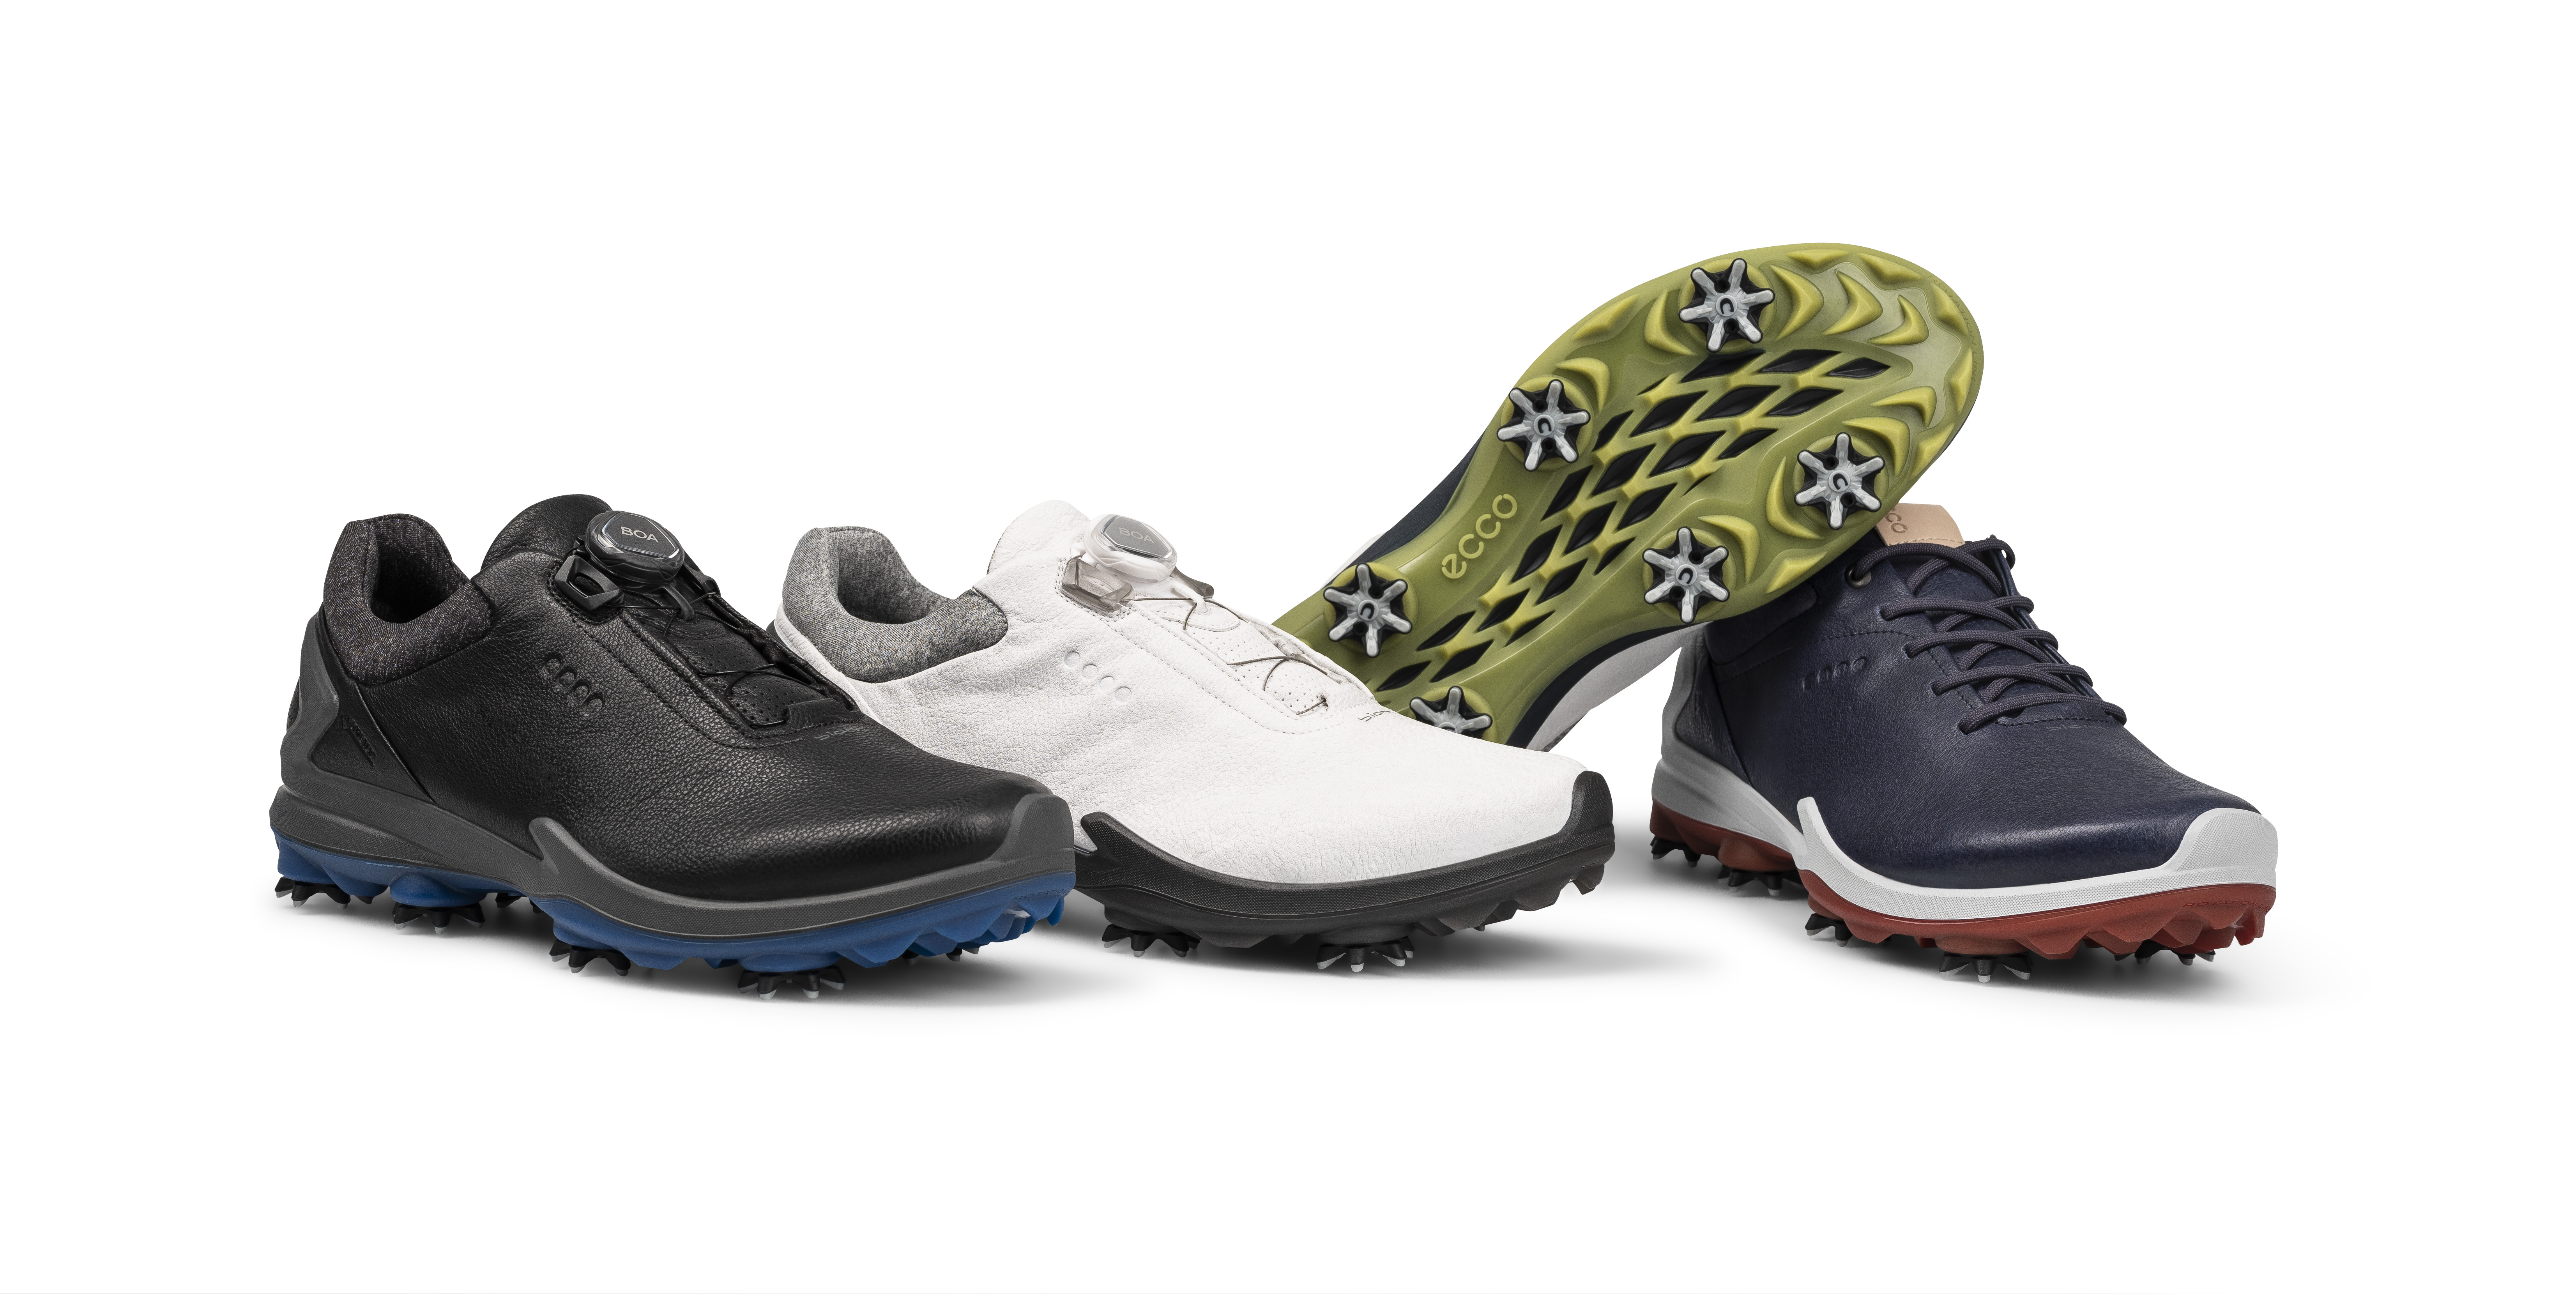 ECCO BIOM G3 golf shoe review | GolfMagic